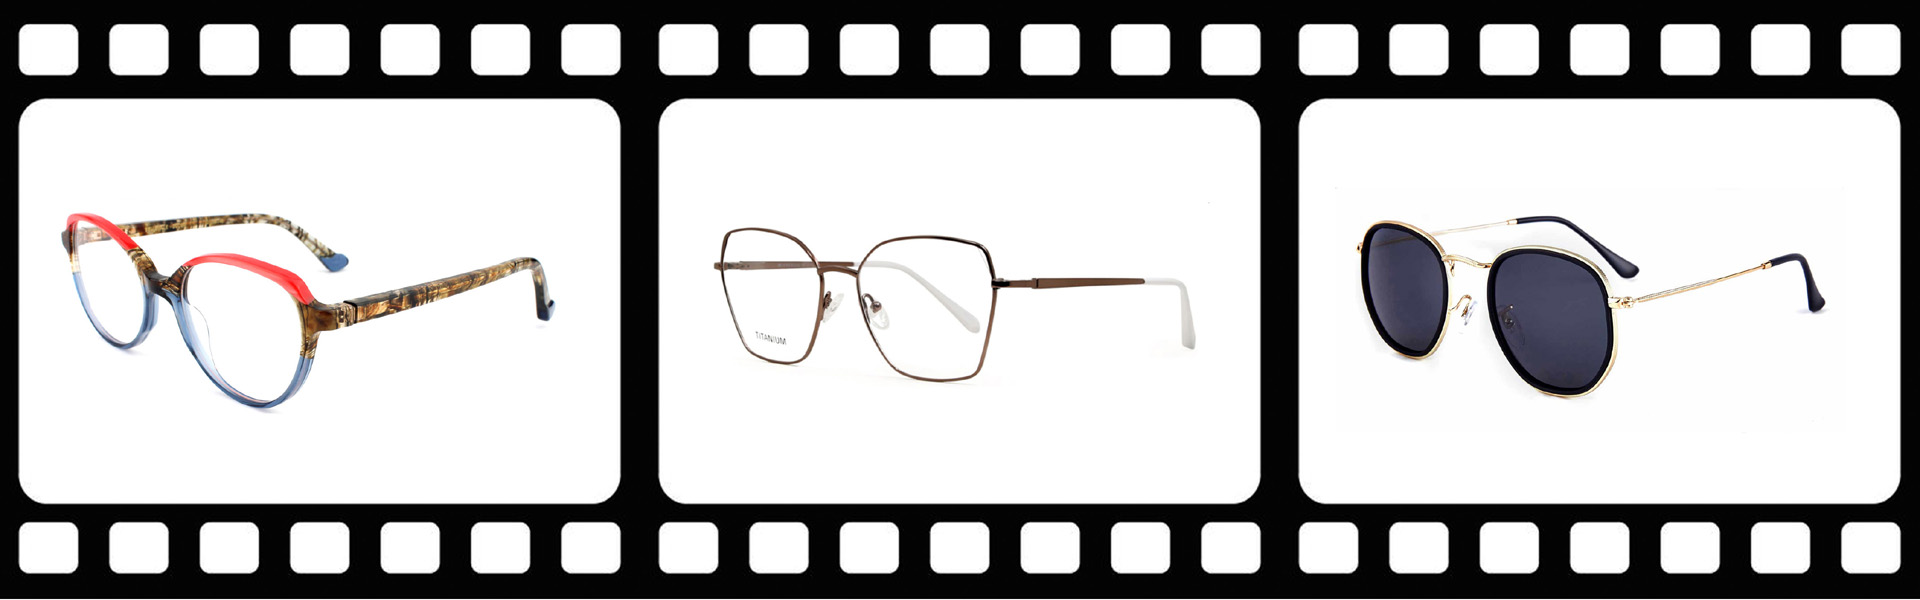 ready stock eyewear,eyewear,ready stock glasses,Wenzhou Ruite Optics Co.,Ltd